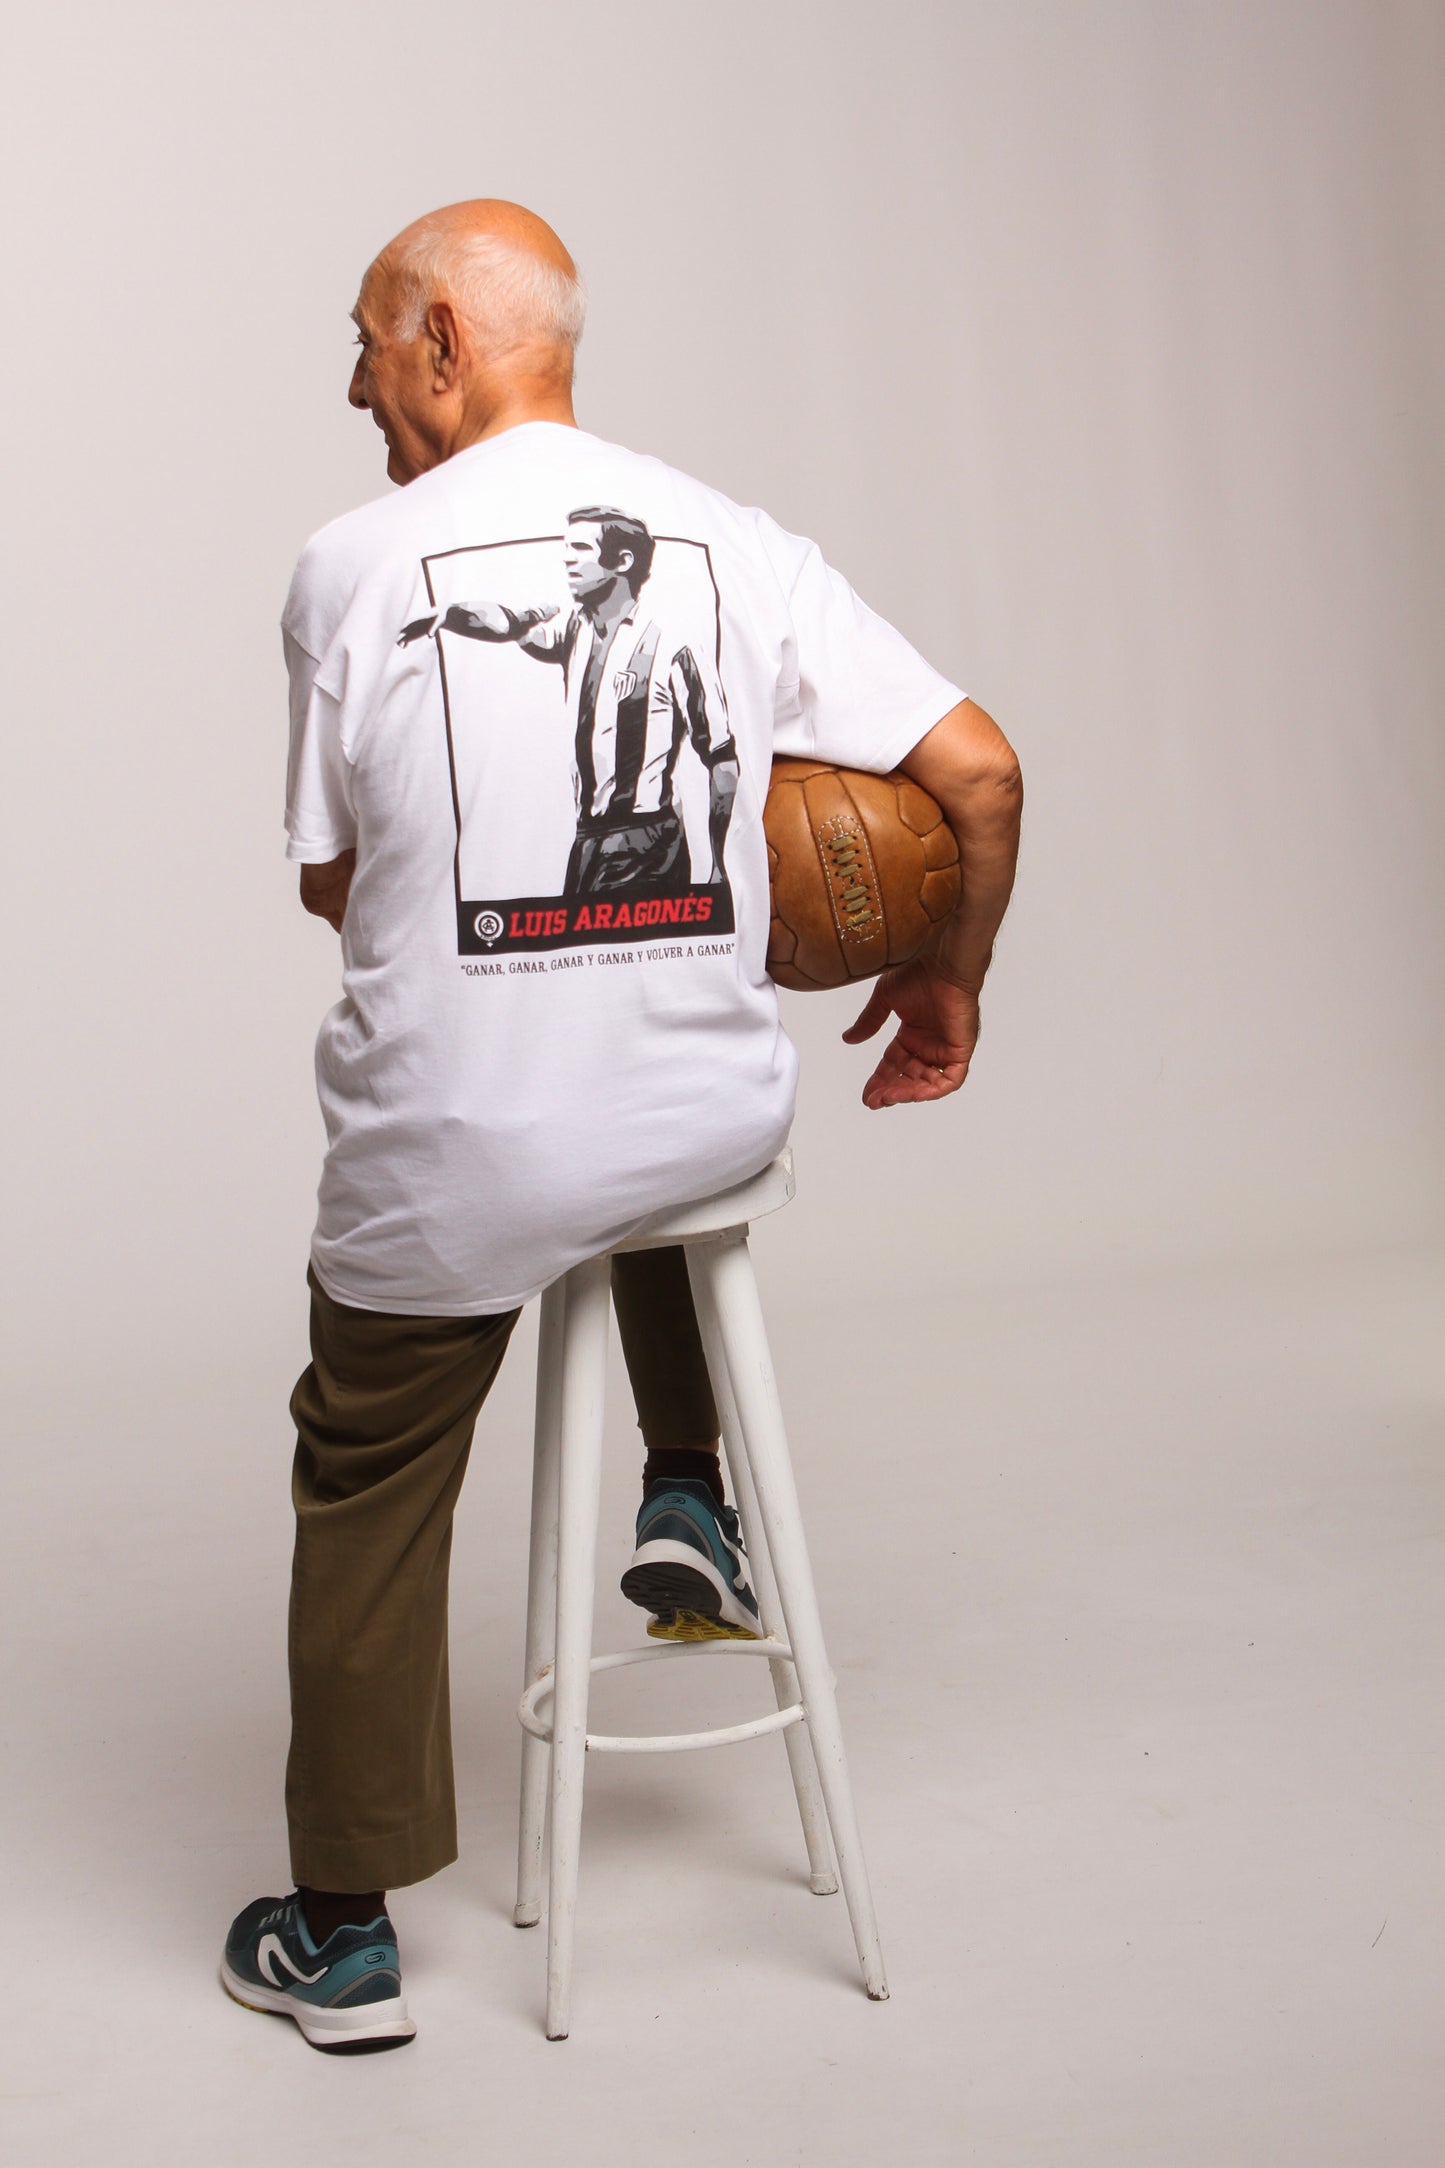 Camiseta "ARAGONÉS"  de Luis Aragonés